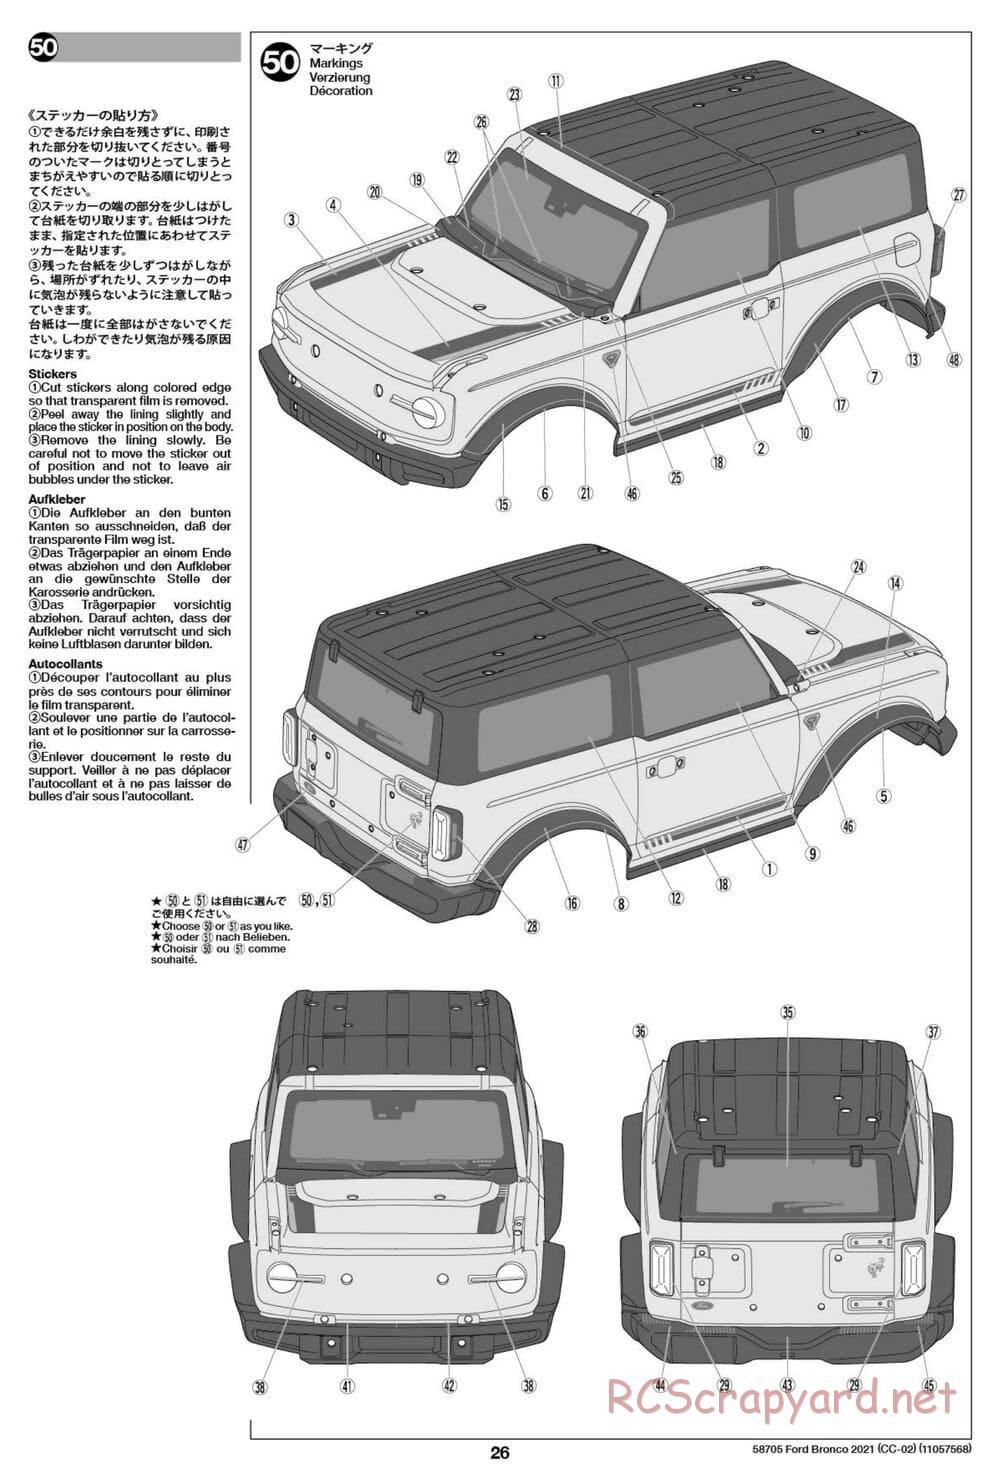 Tamiya - Ford Bronco 2021 - CC-02 Chassis - Manual - Page 26